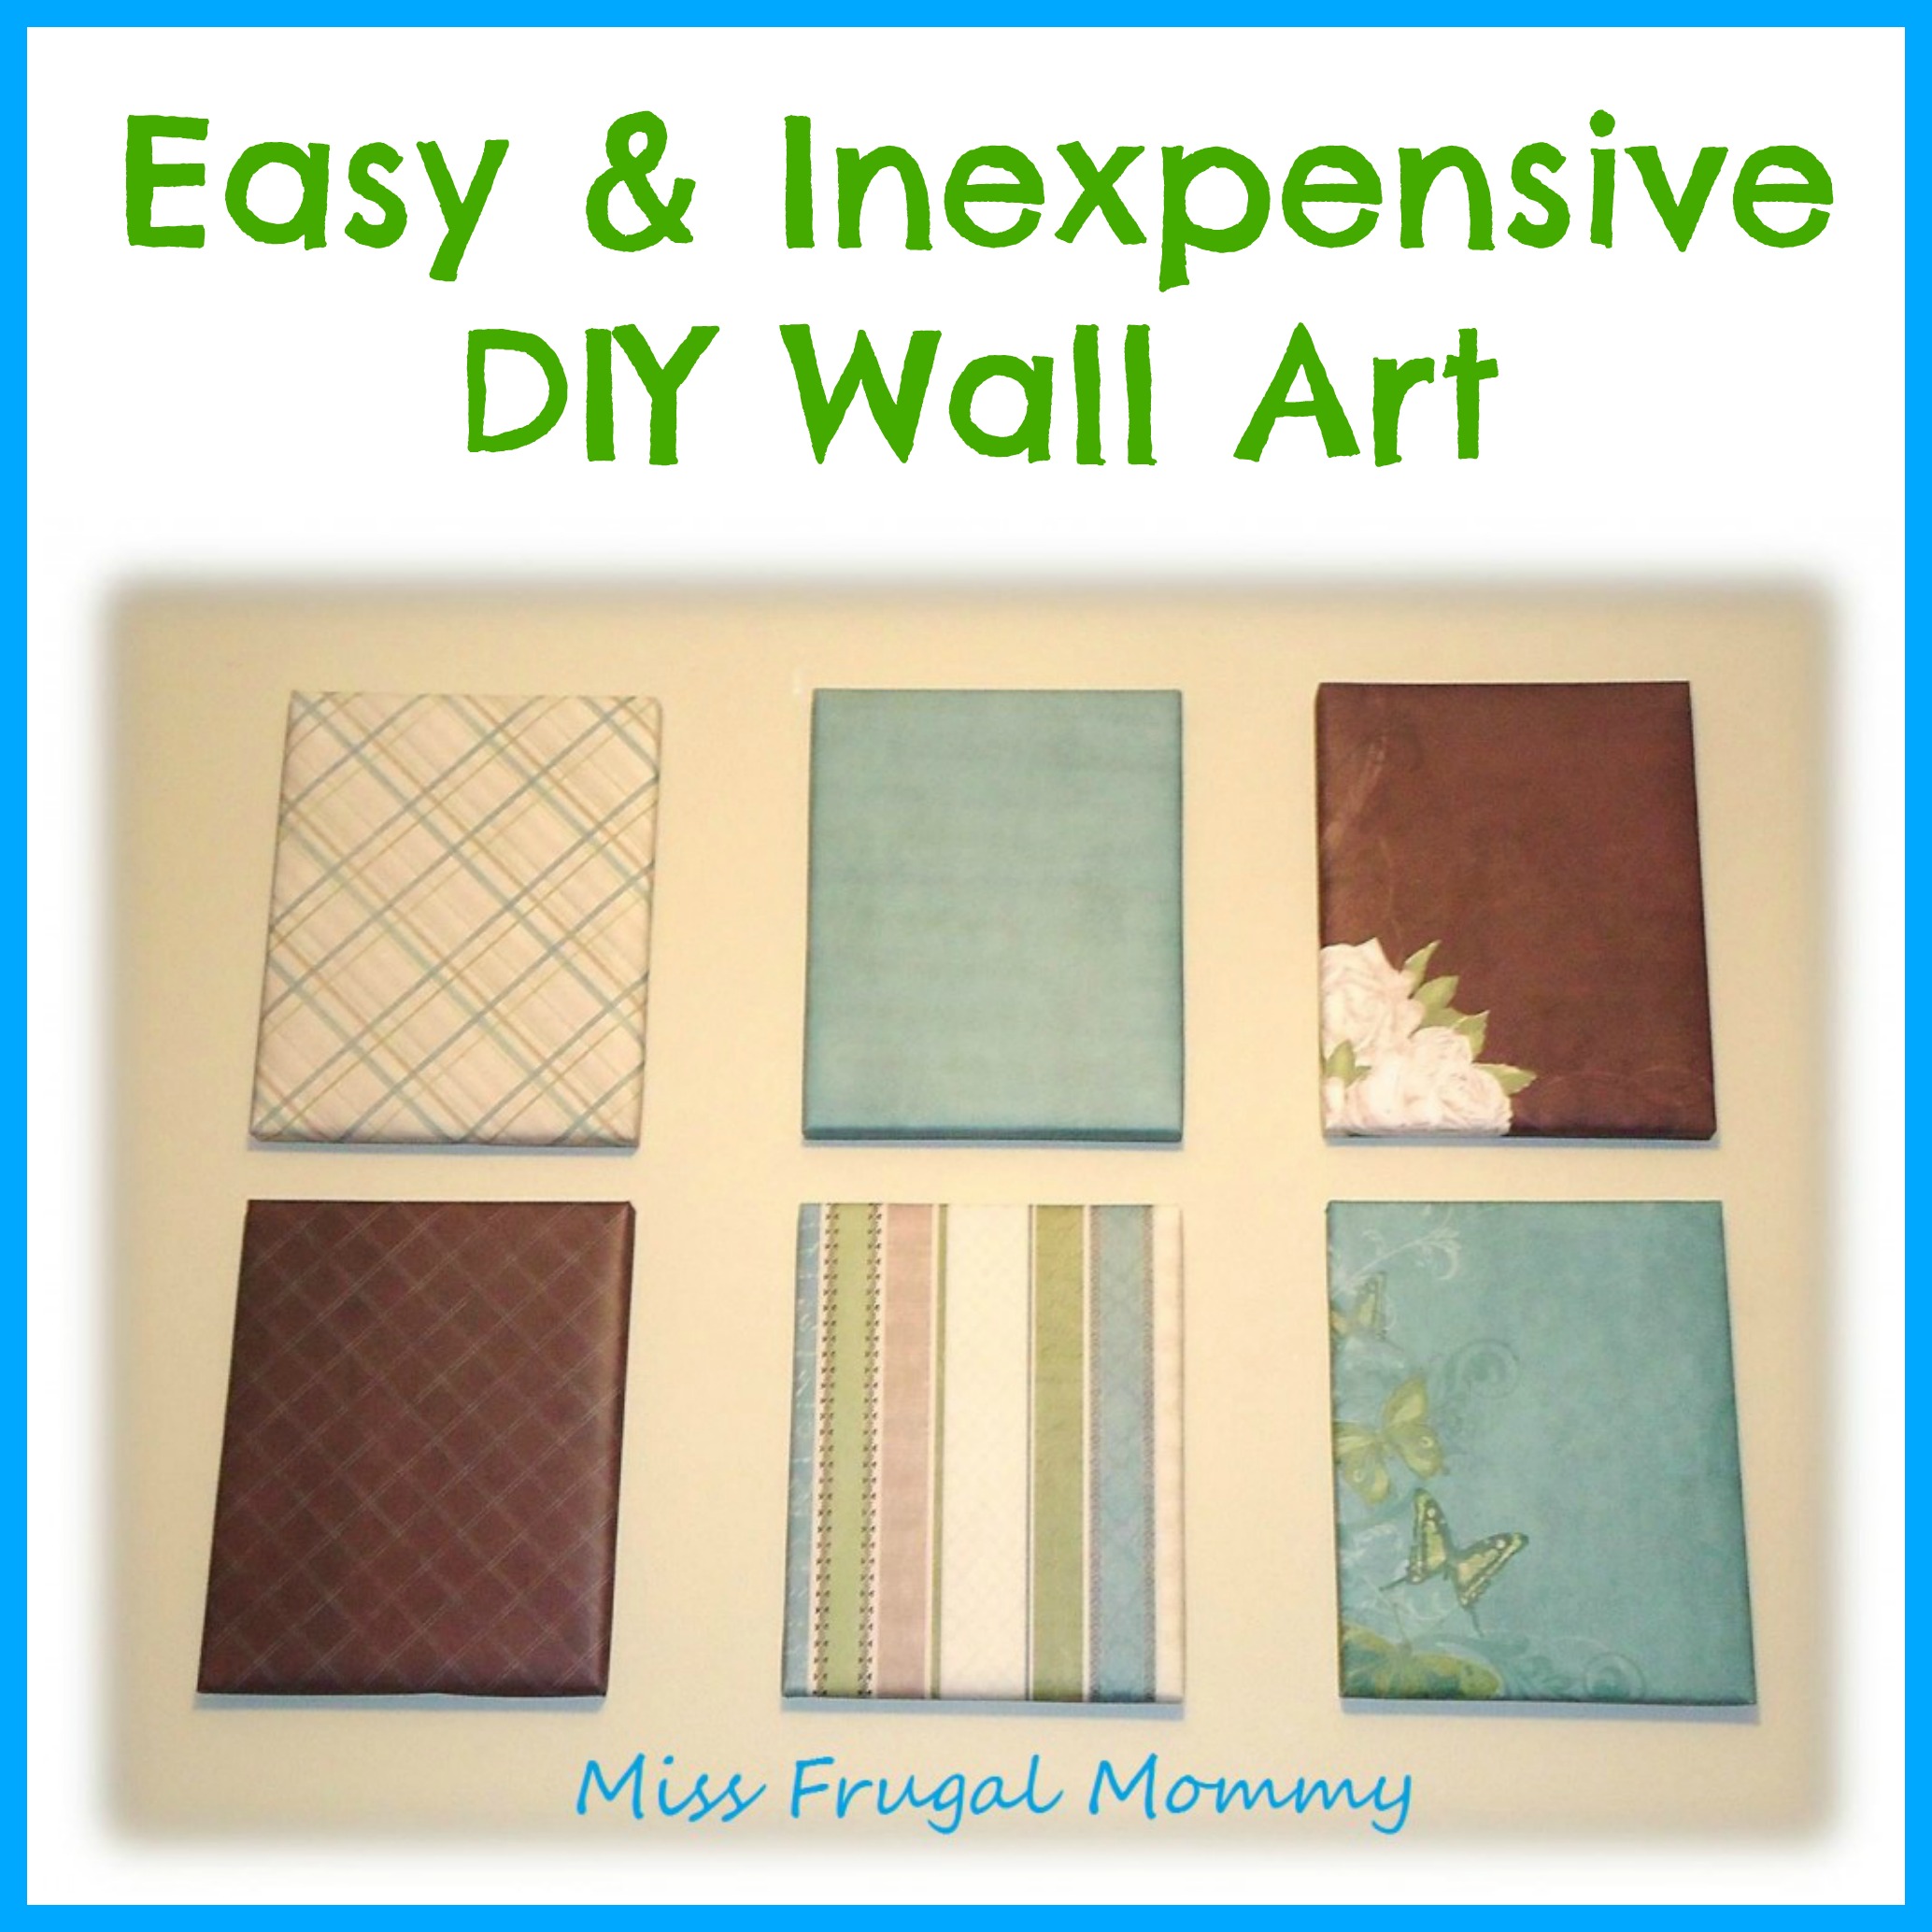 Easy & Inexpensive DIY Wall Art